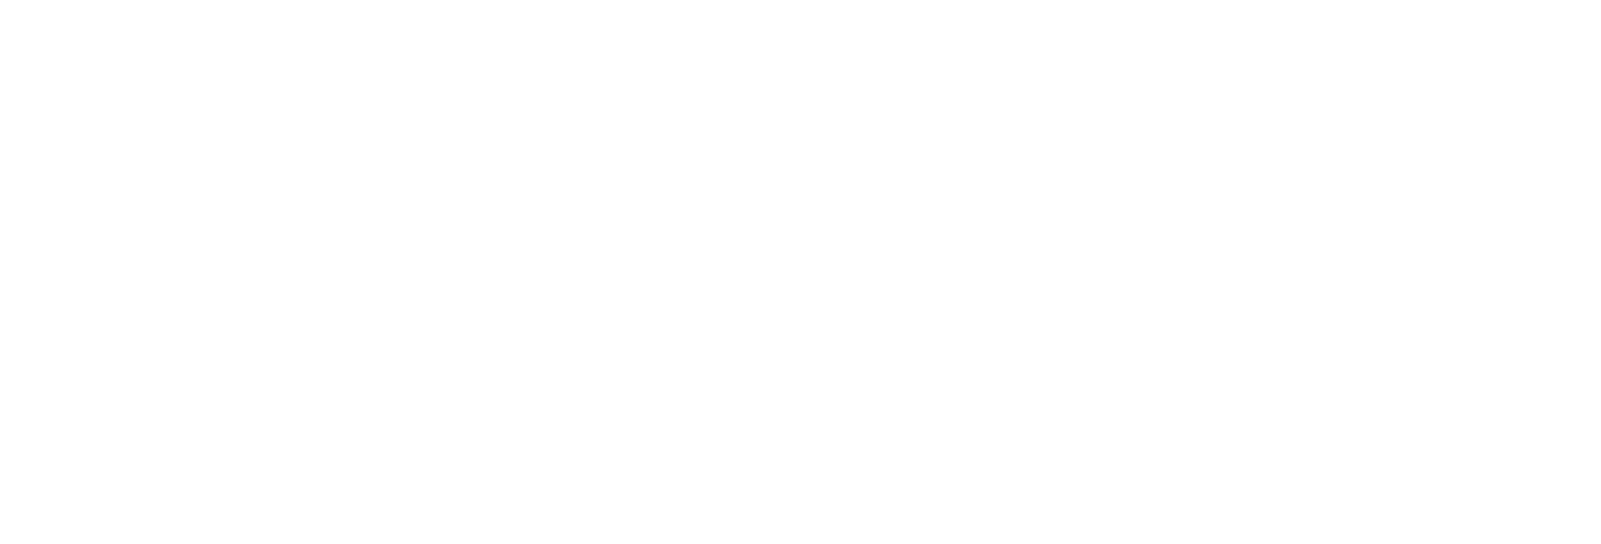 Cielo Waste Solutions logo large for dark backgrounds (transparent PNG)